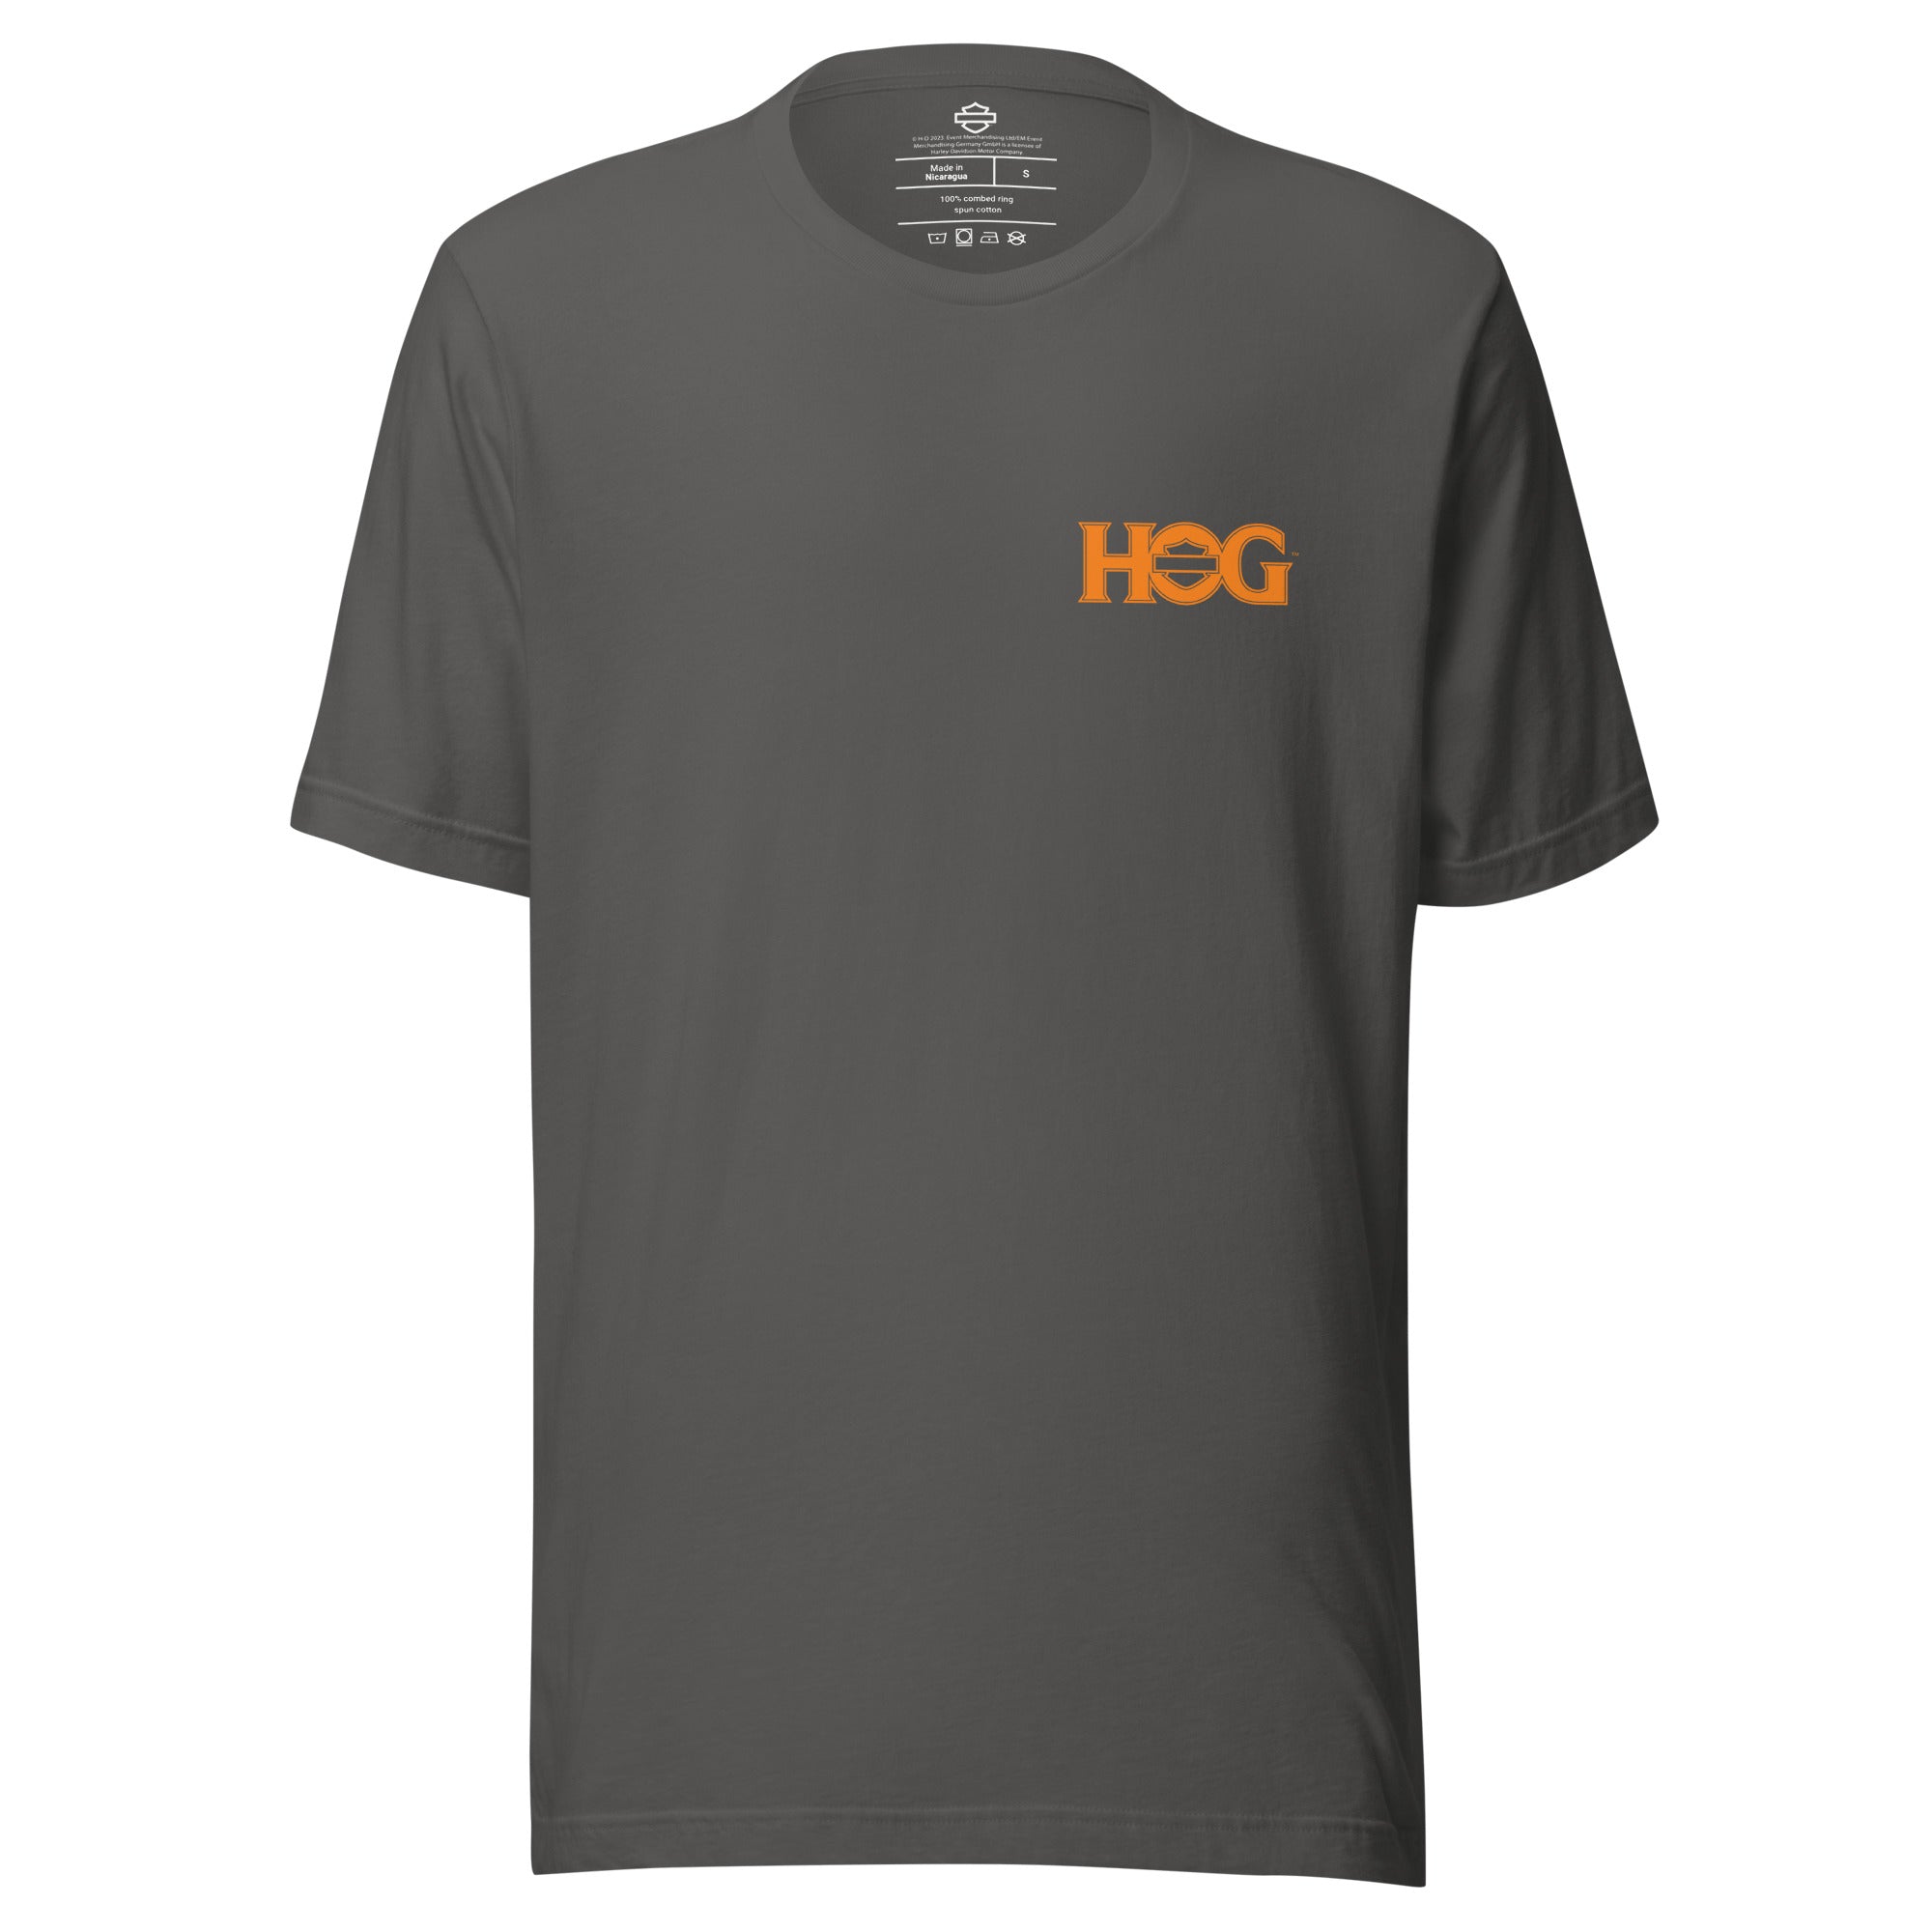 HOG Logo Unisex T-Shirt